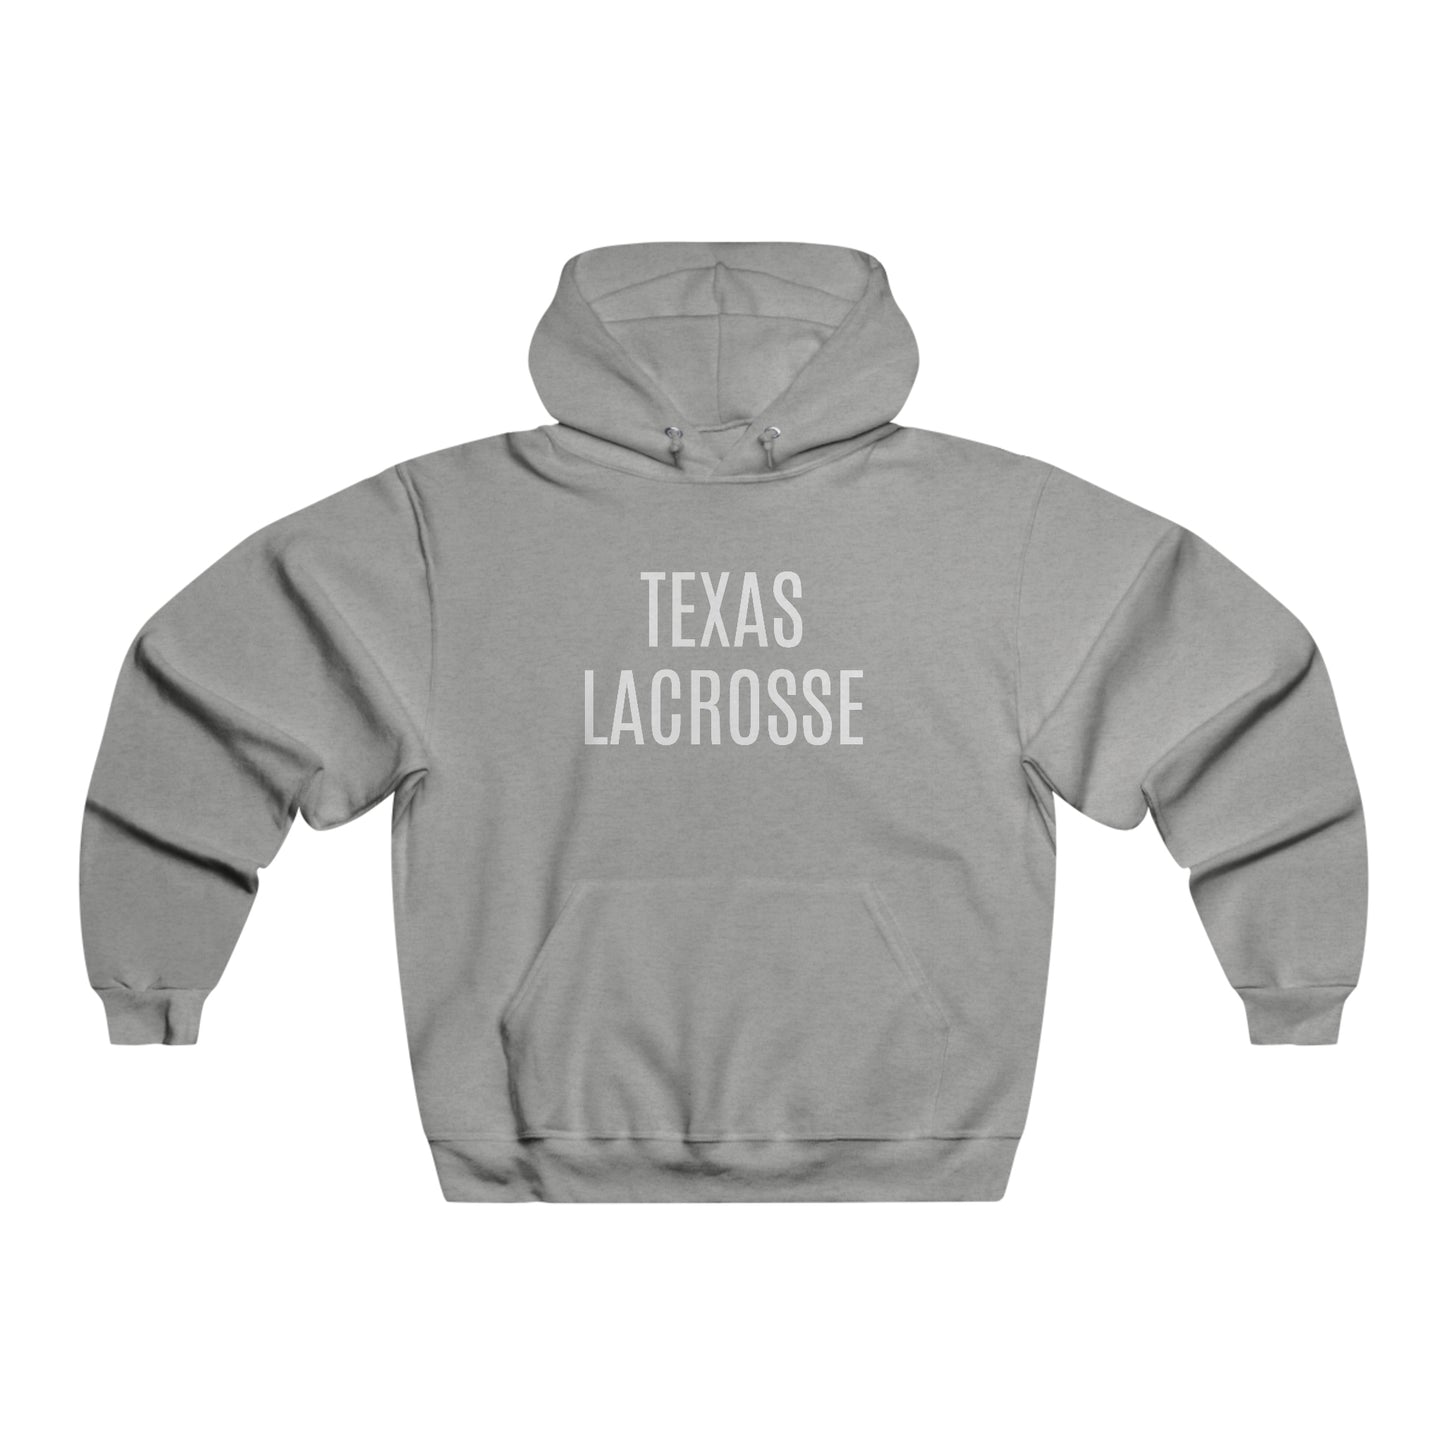 Texas Lacrosse Hooded Sweatshirt